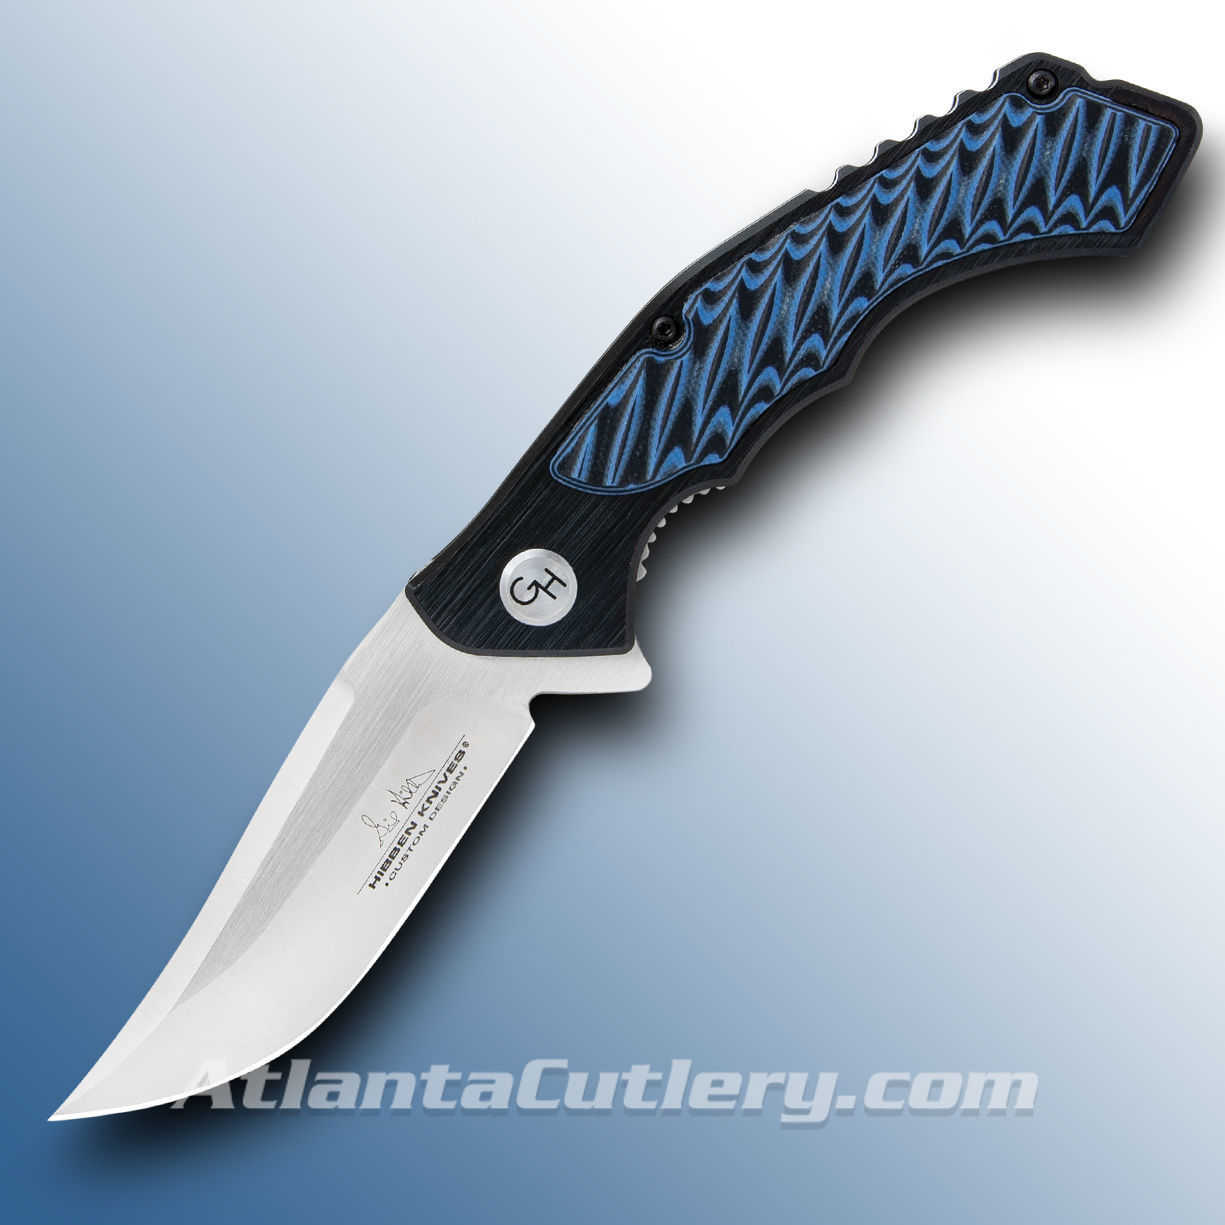 Gil Hibben Whirlwind Blue pocket knife has layered G10 scales, ball bearing blade pivot mechanism, 7Cr17 stainless steel blade